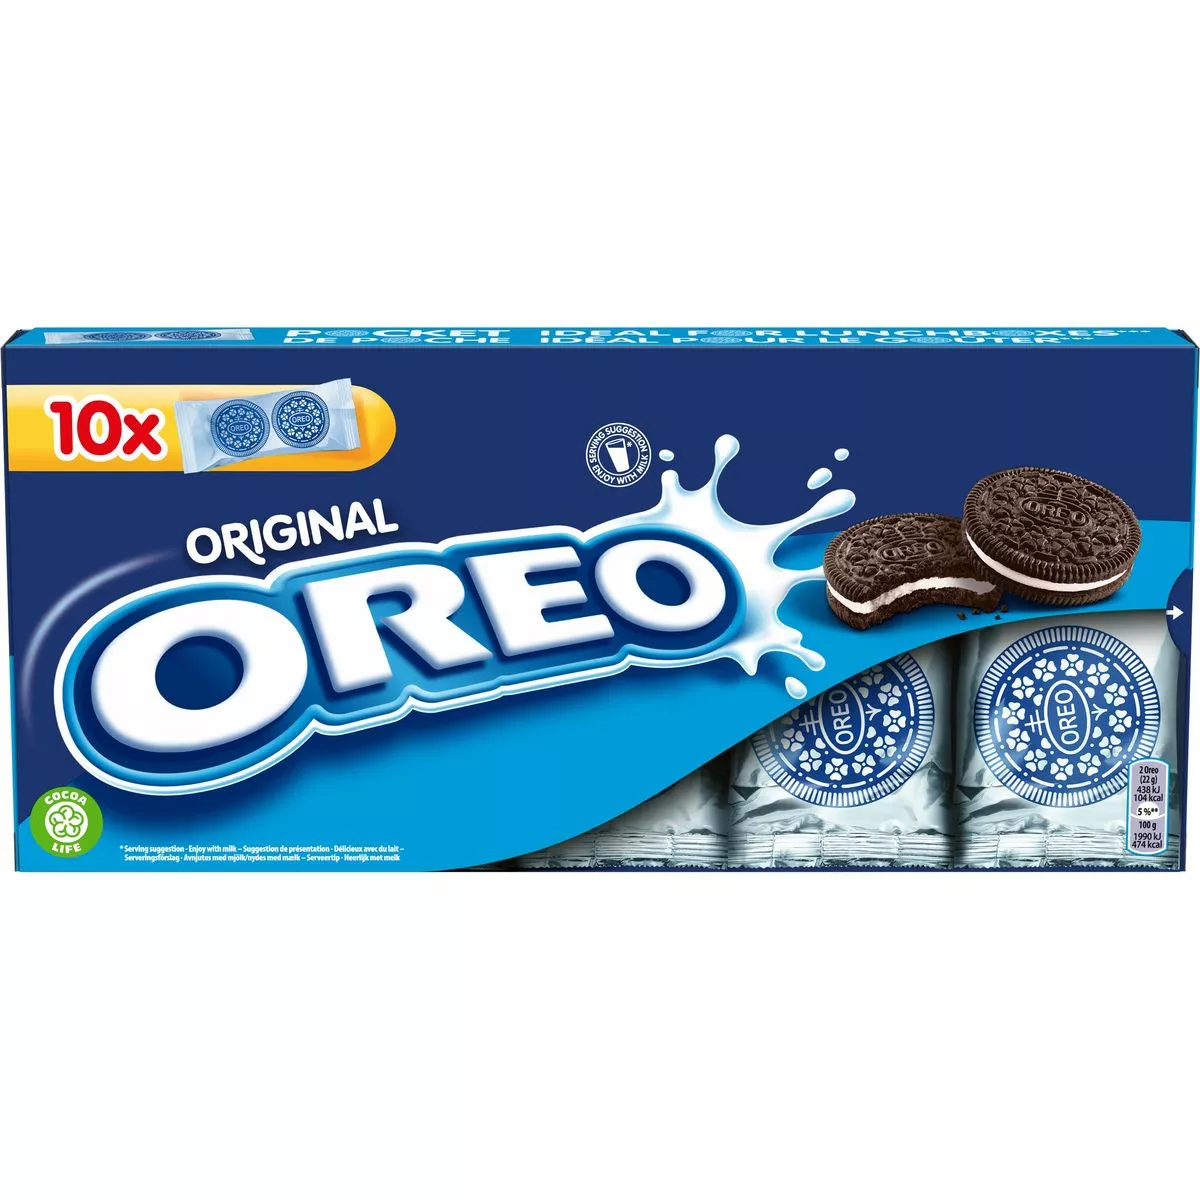 OREO Original chocolate biscuit 10x2 220g